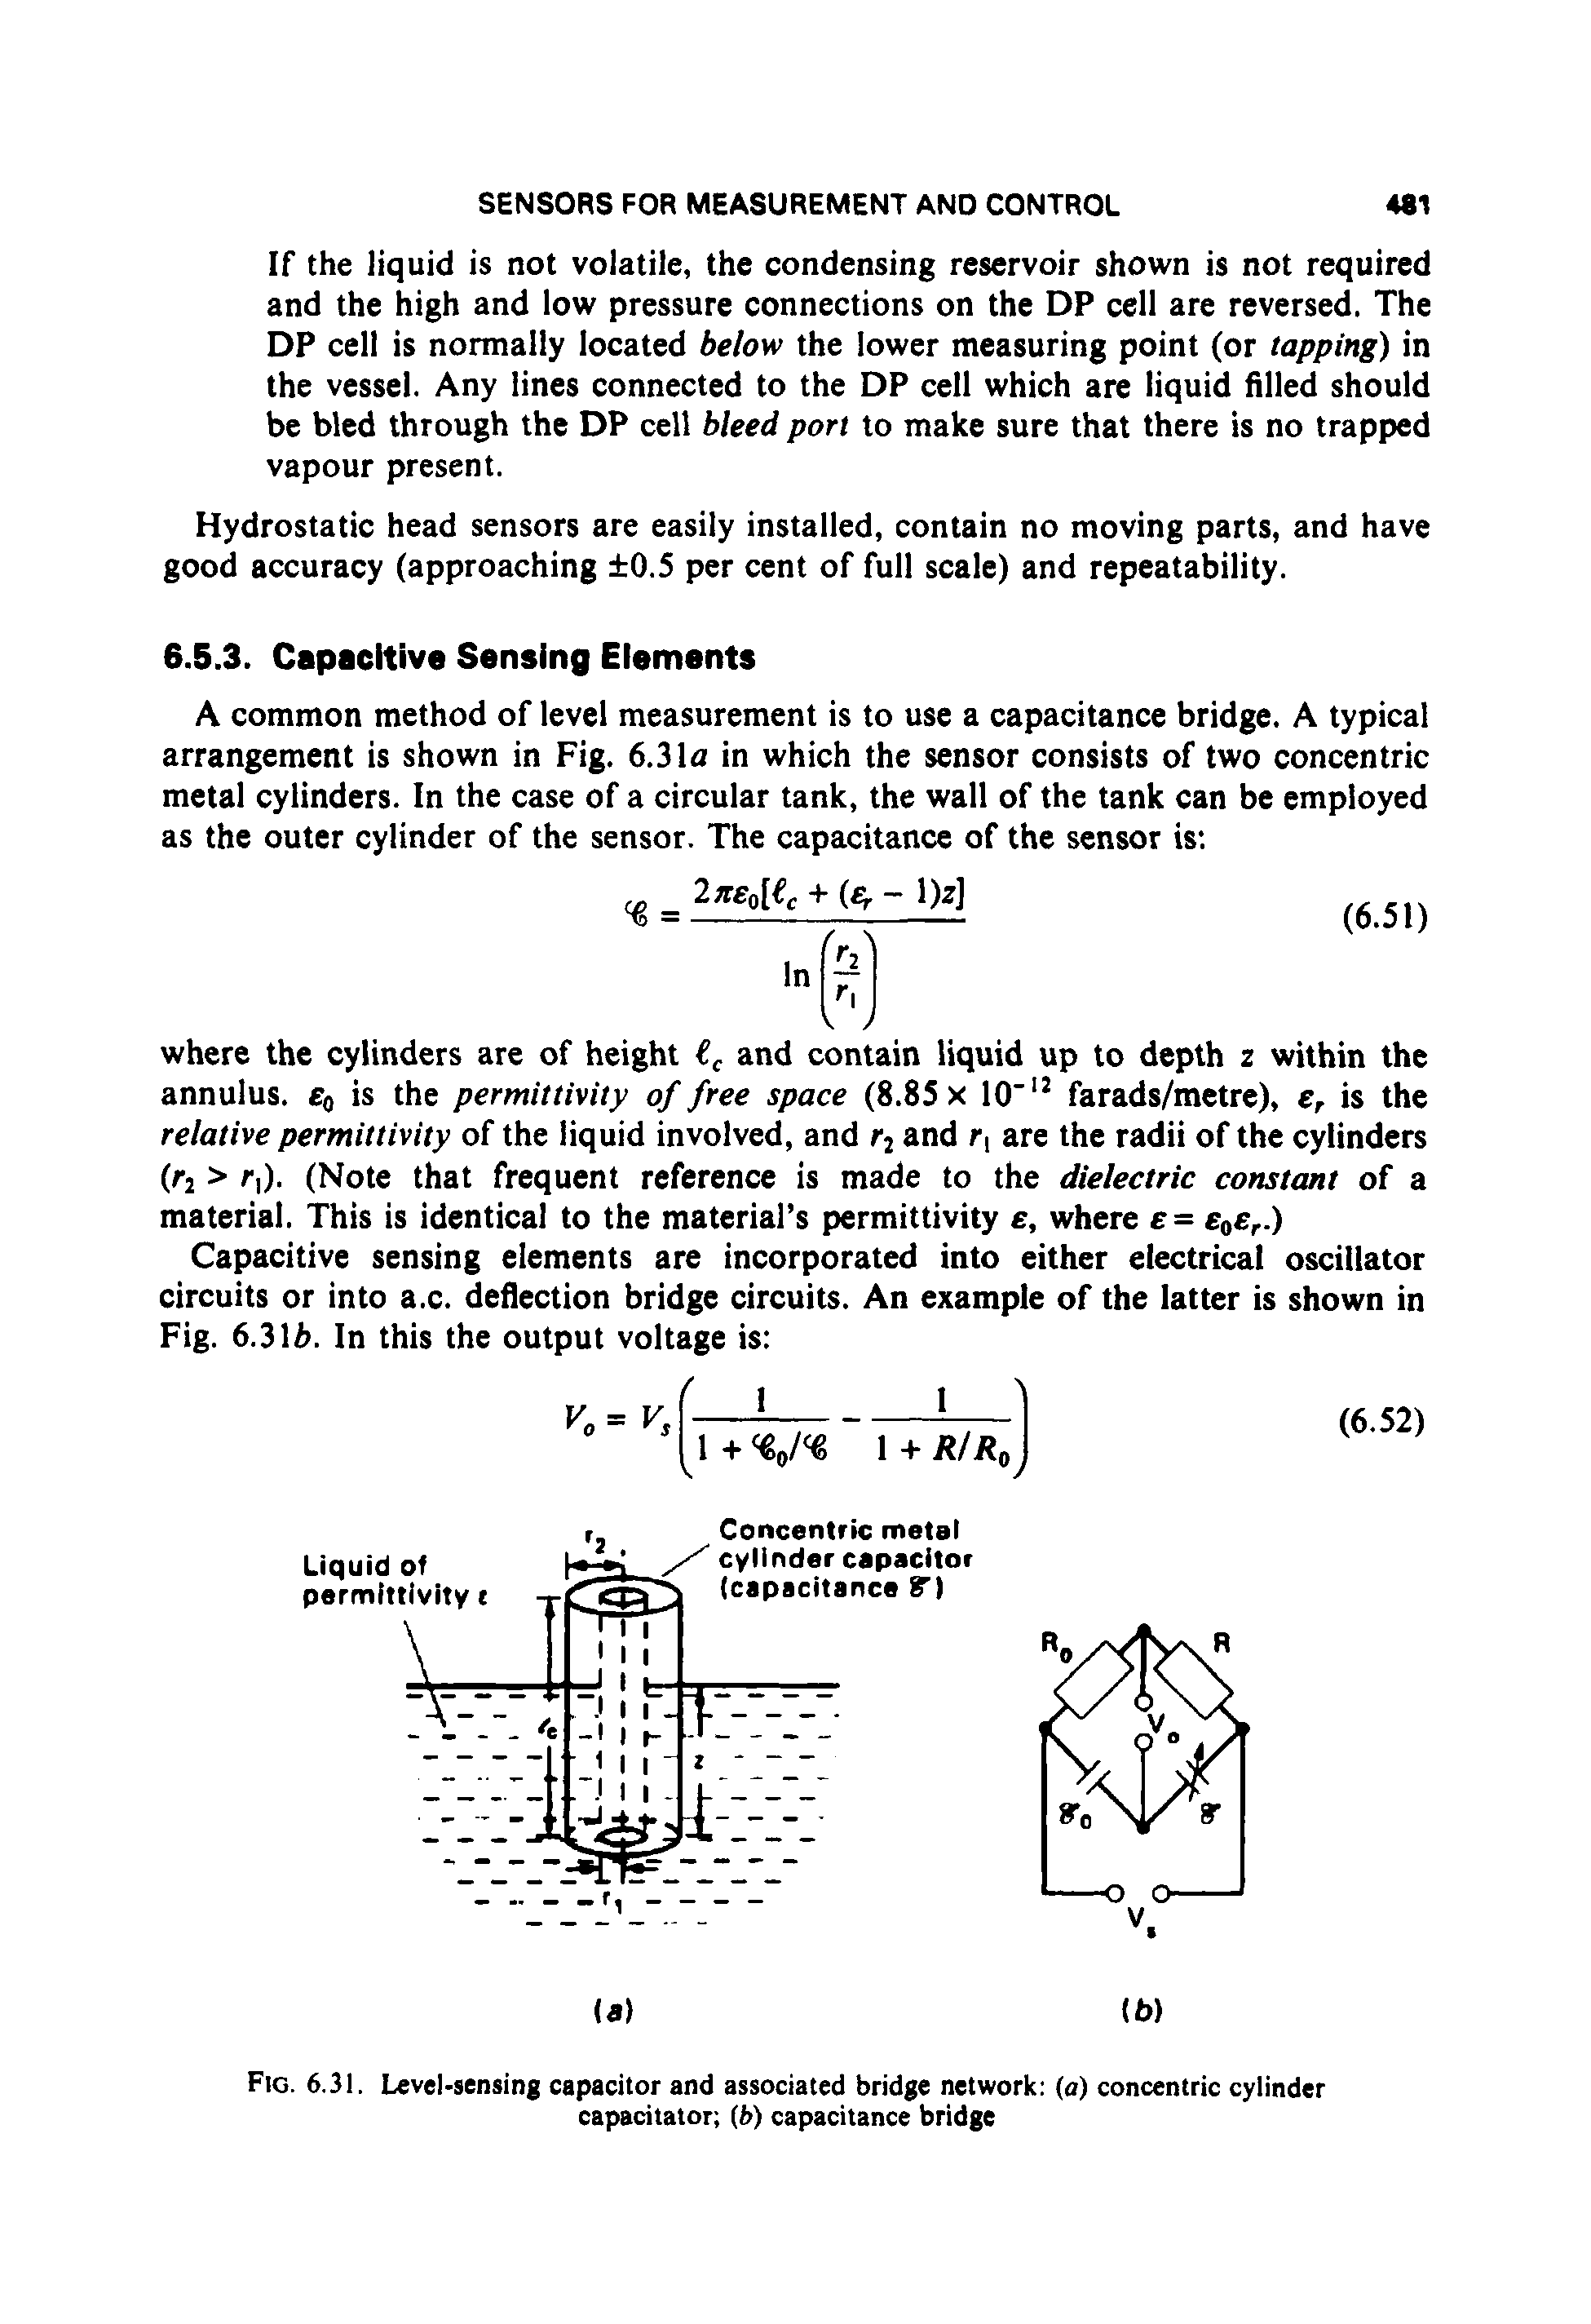 Fig. 6.31. Level-sensing capacitor and associated bridge network (a) concentric cylinder capacitator (6) capacitance bridge...